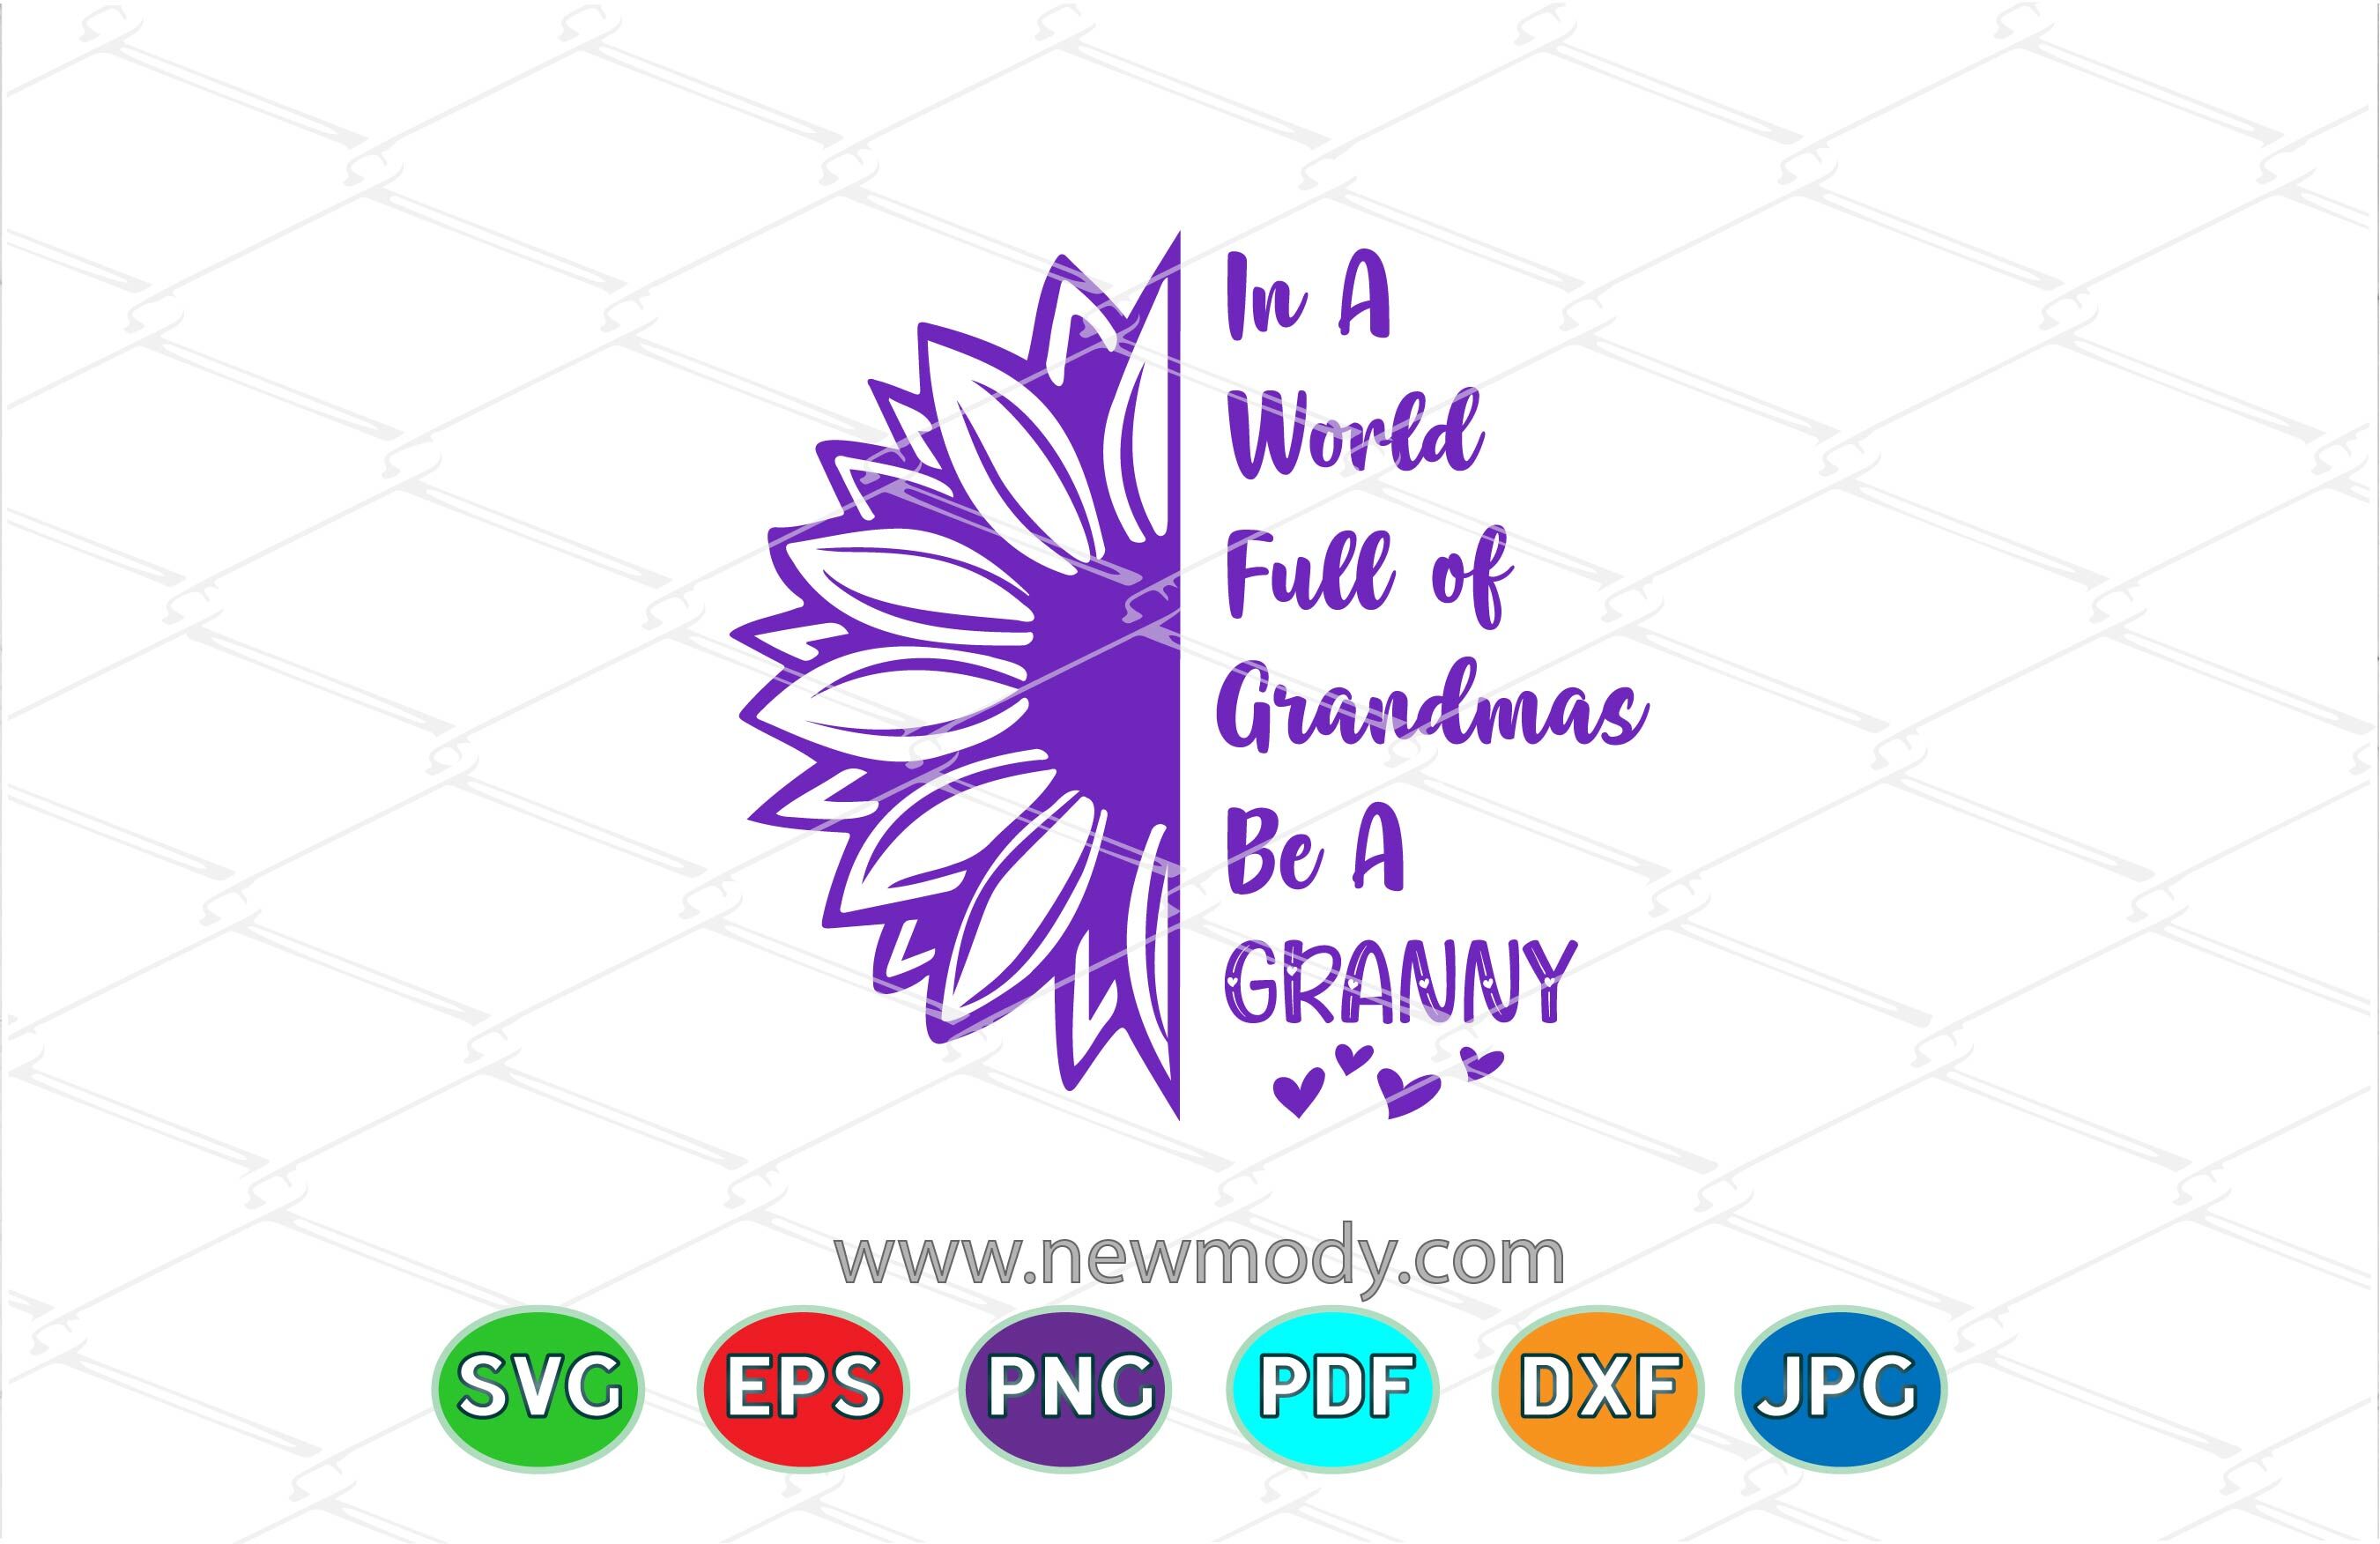 Download In A World Full Of Grandmas Be A Granny Svg Grandma Svg By Amittaart Thehungryjpeg Com